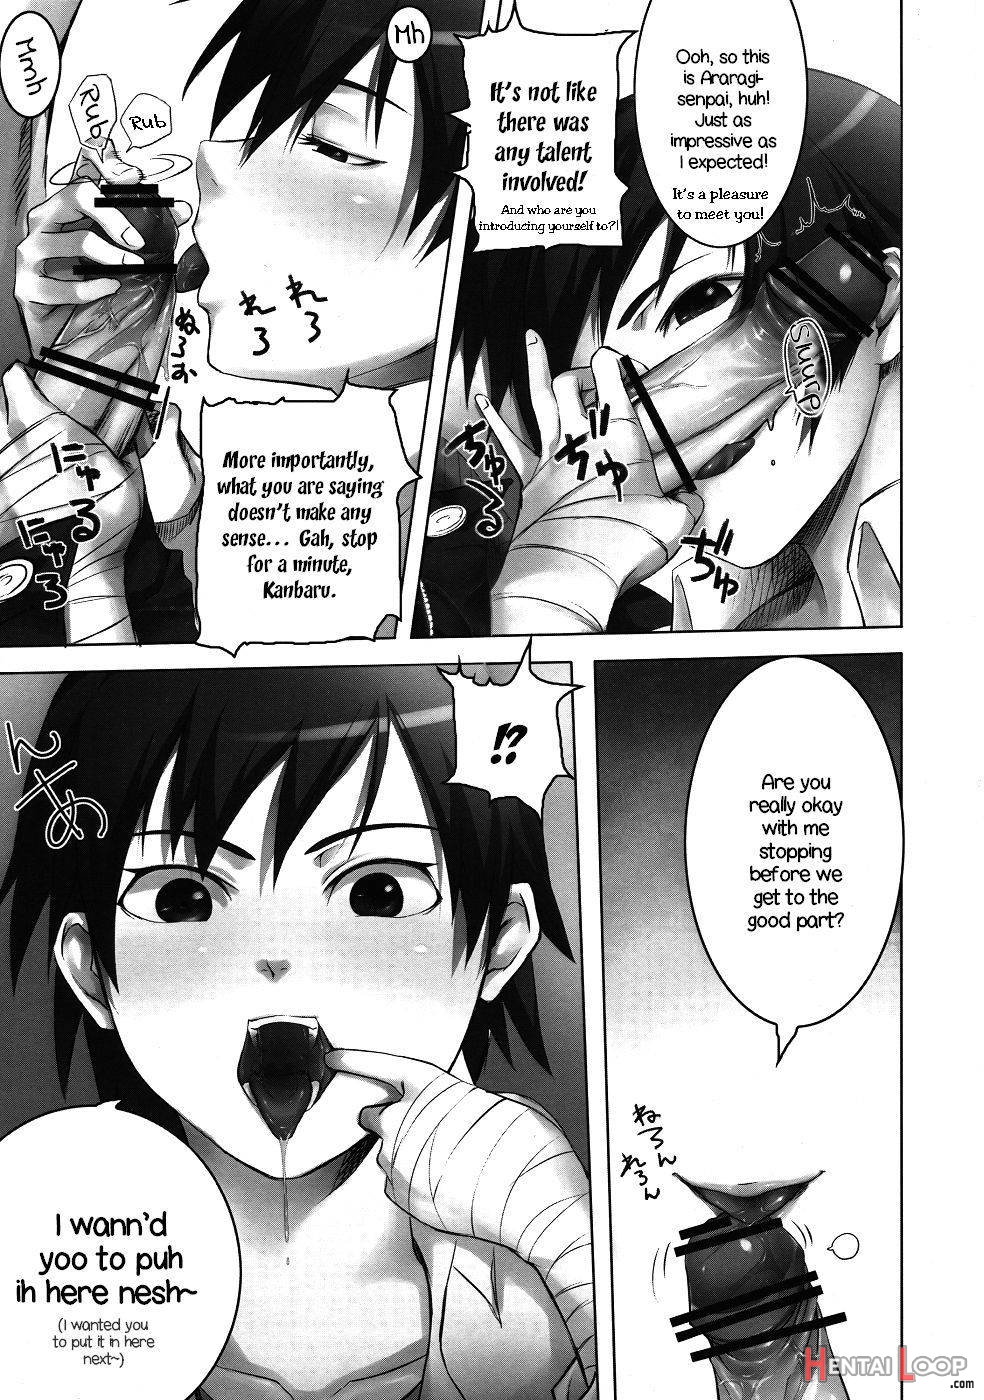 Kanbaru-san to page 5